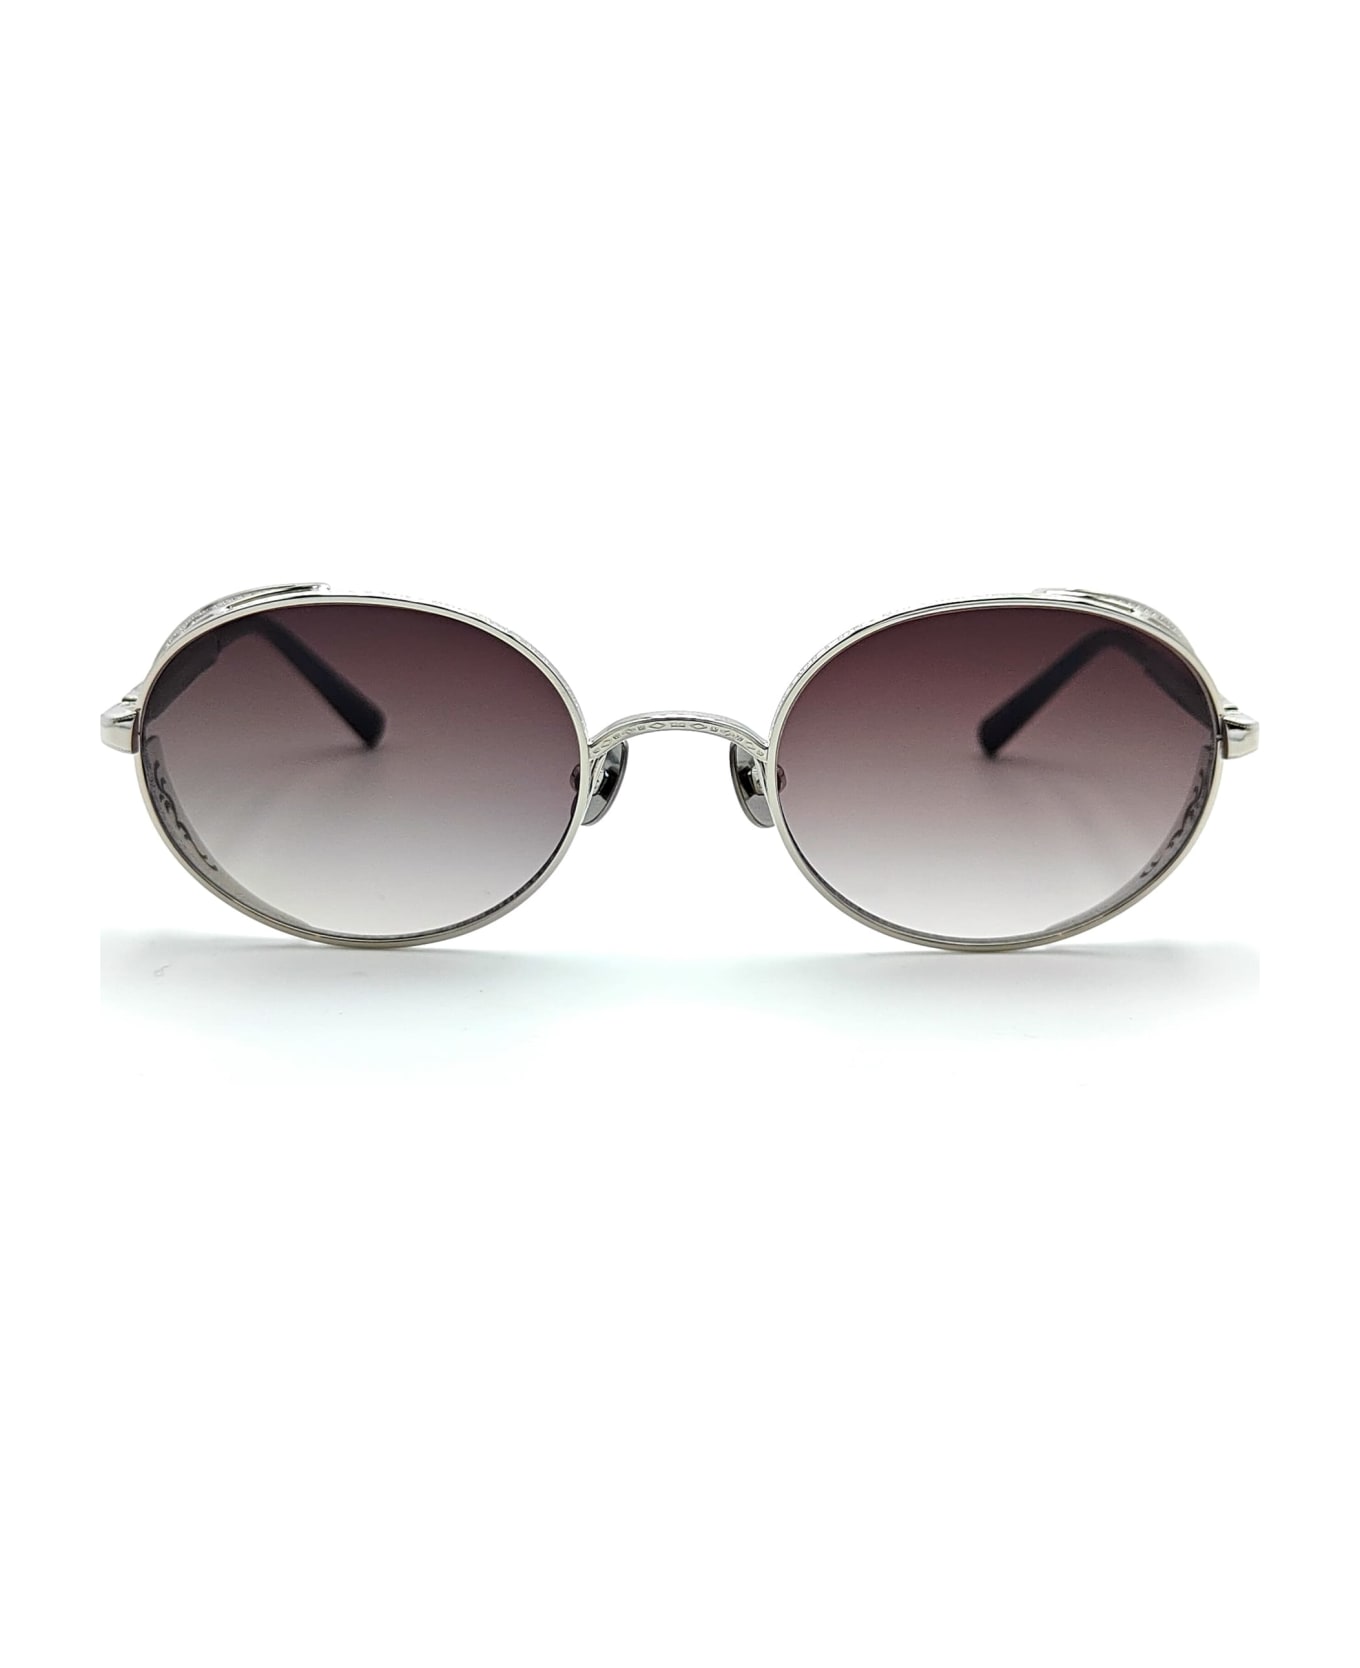 Matsuda M3137 - Palladium White Sunglasses - Silver